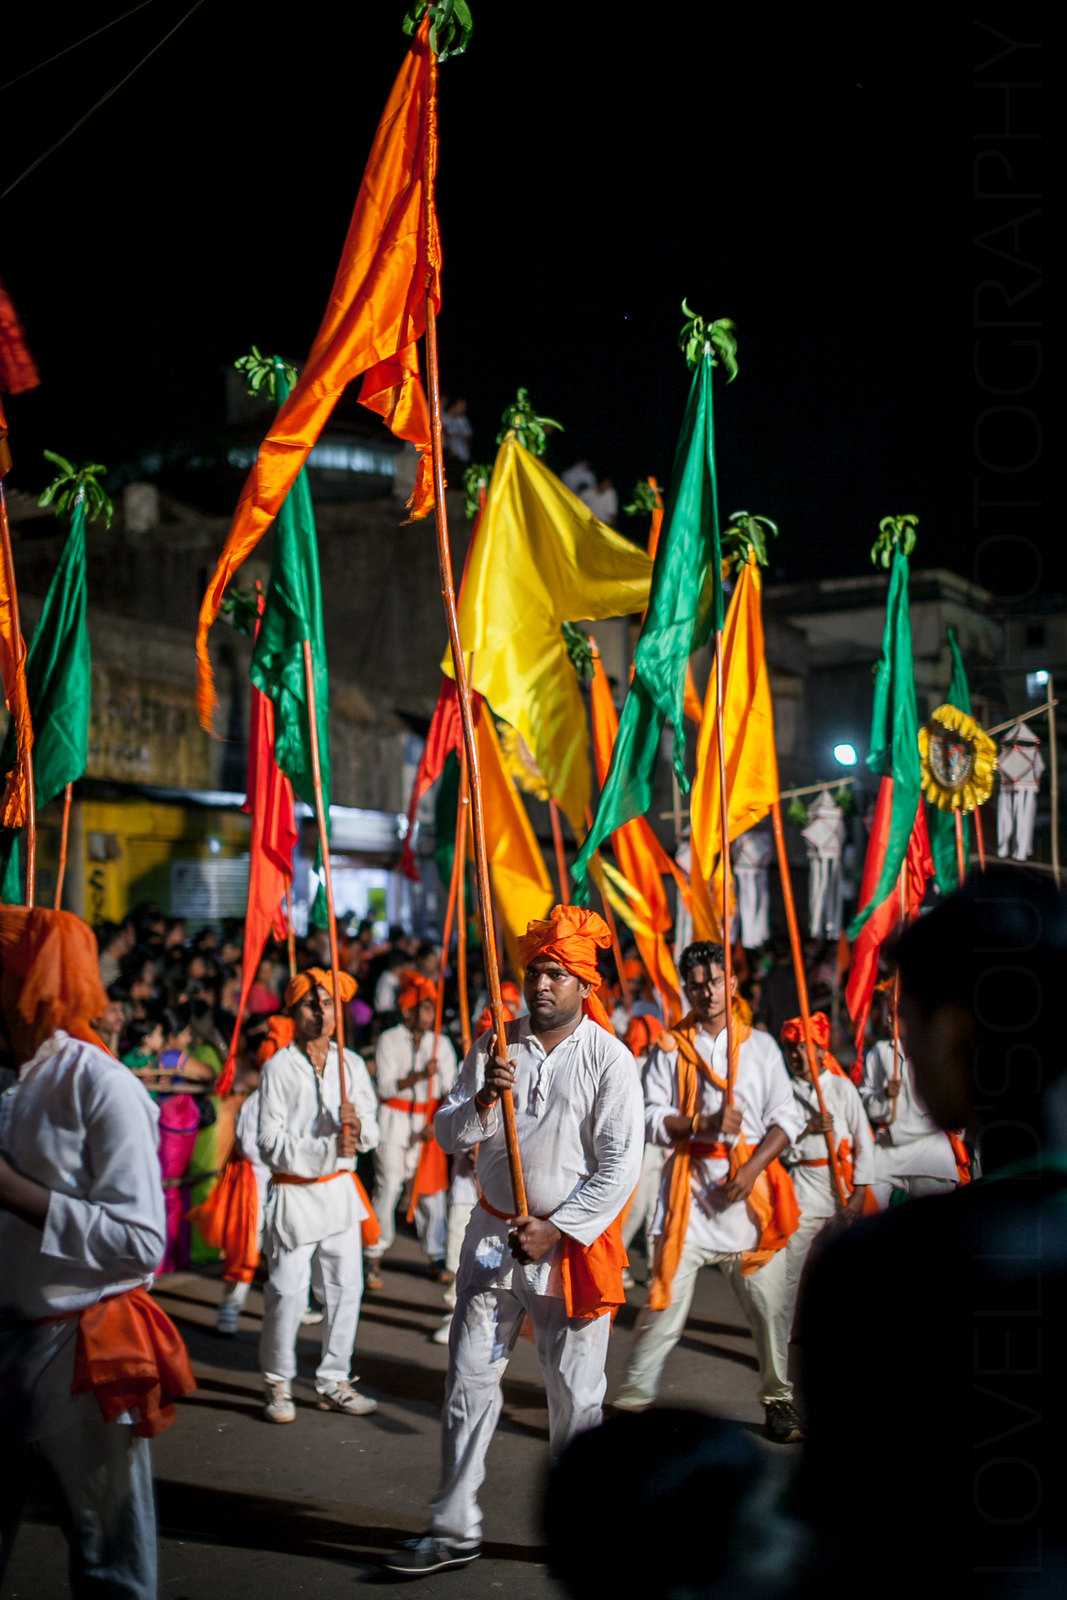 Shigmotsav 2015 - Ponda, Goa